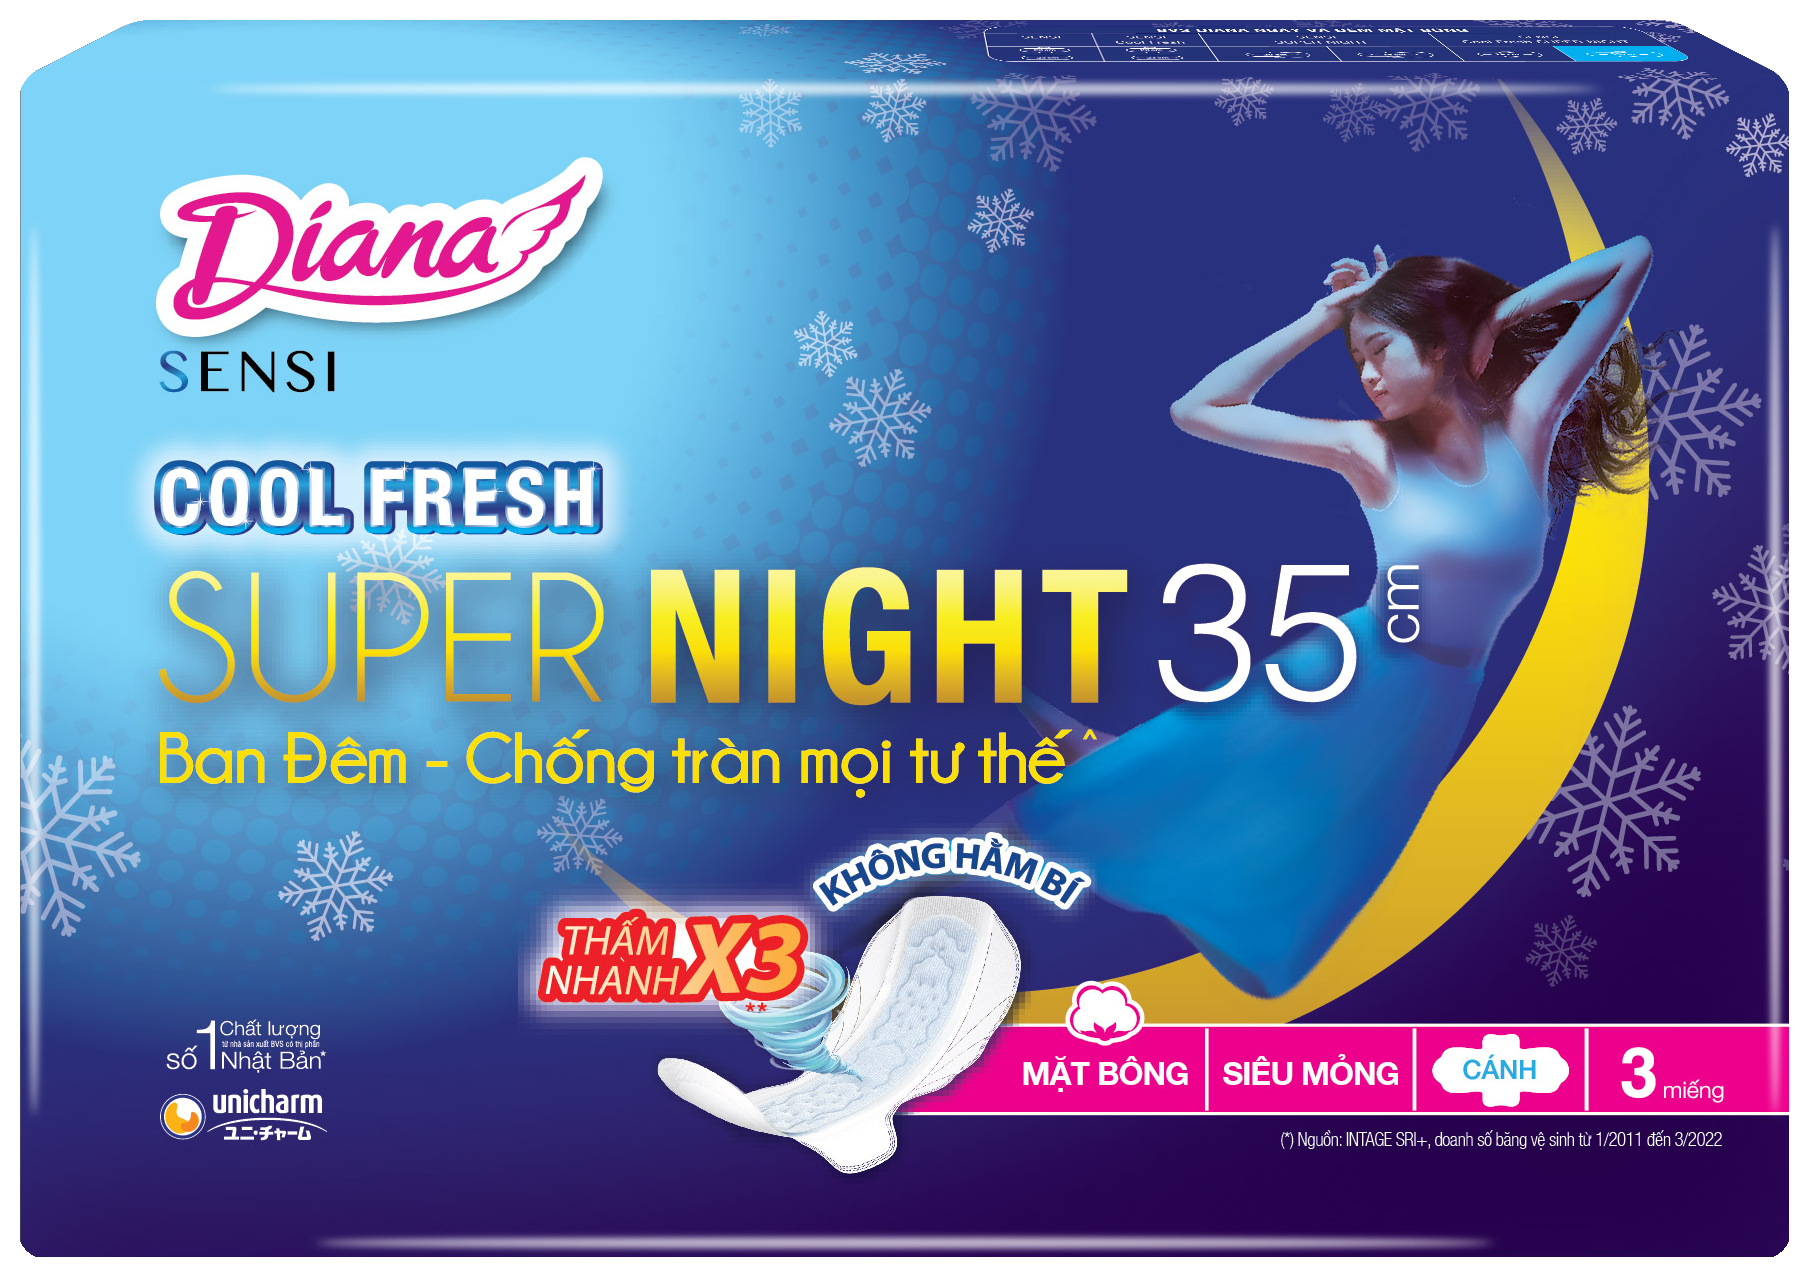 Diana SENSI Cool Fresh Supernight